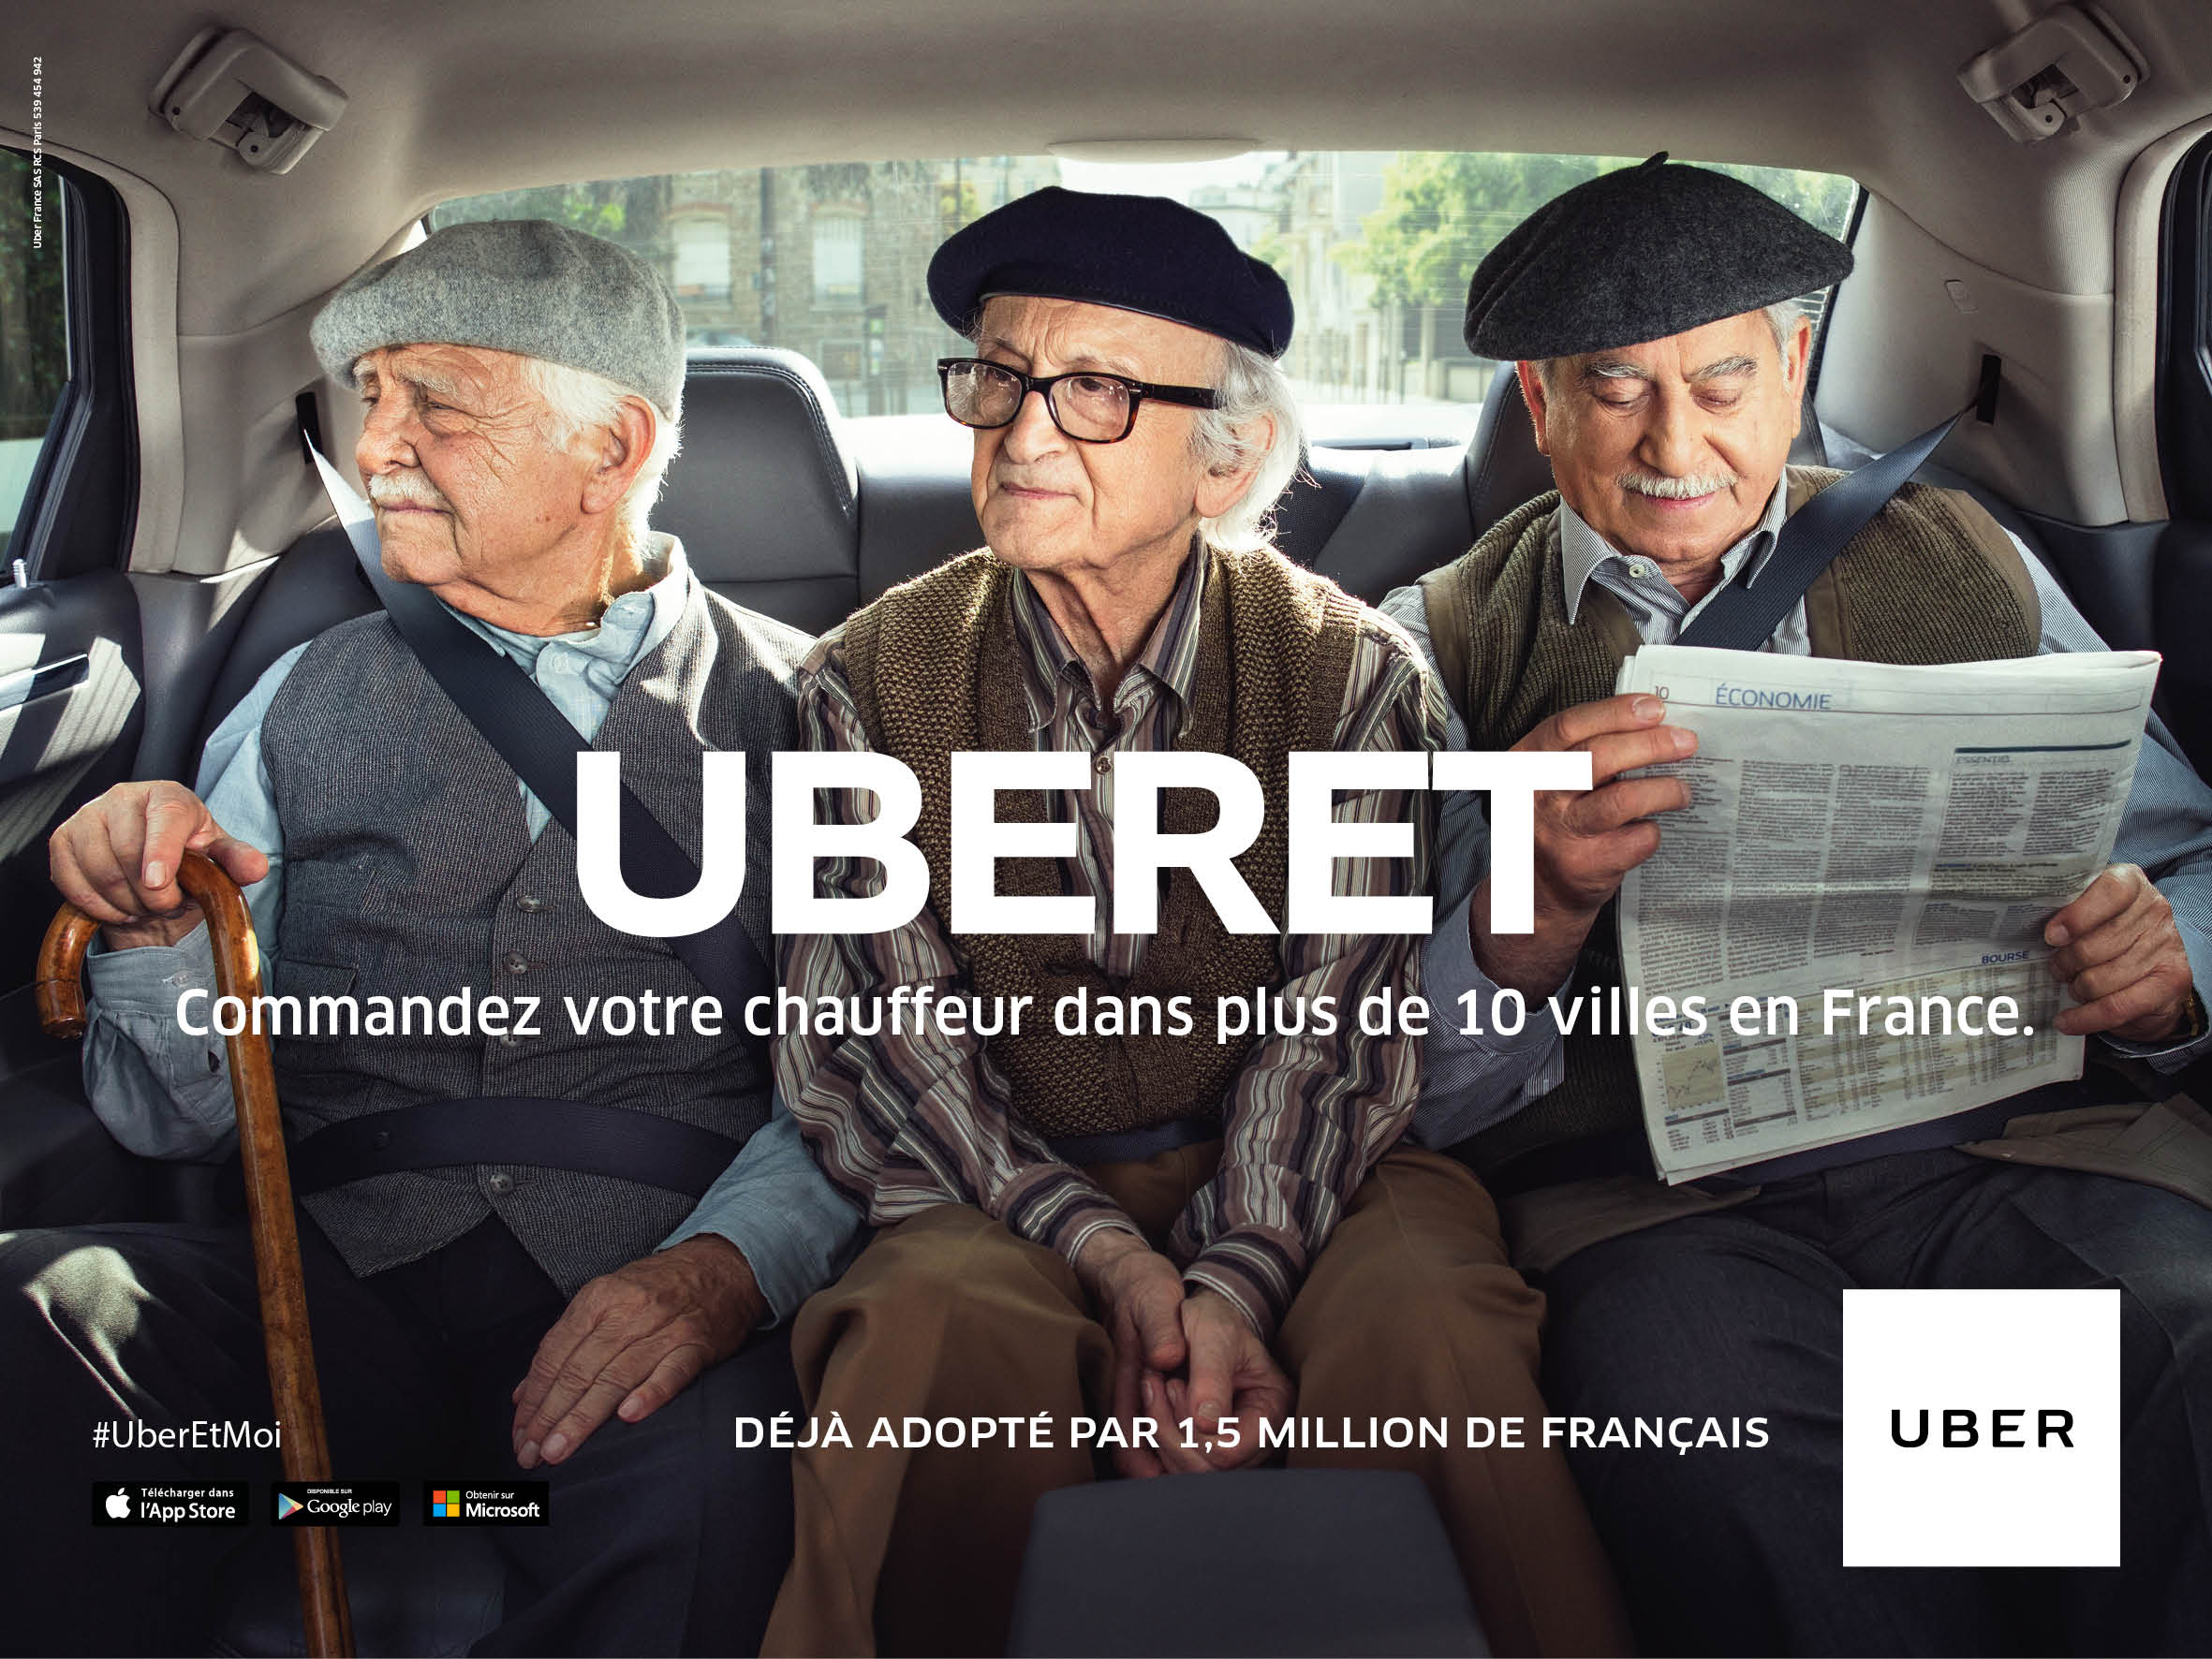 uber-france-publicite-marketing-application-utilisateurs-passagers-mars-2016-agence-marcel-publicis-3